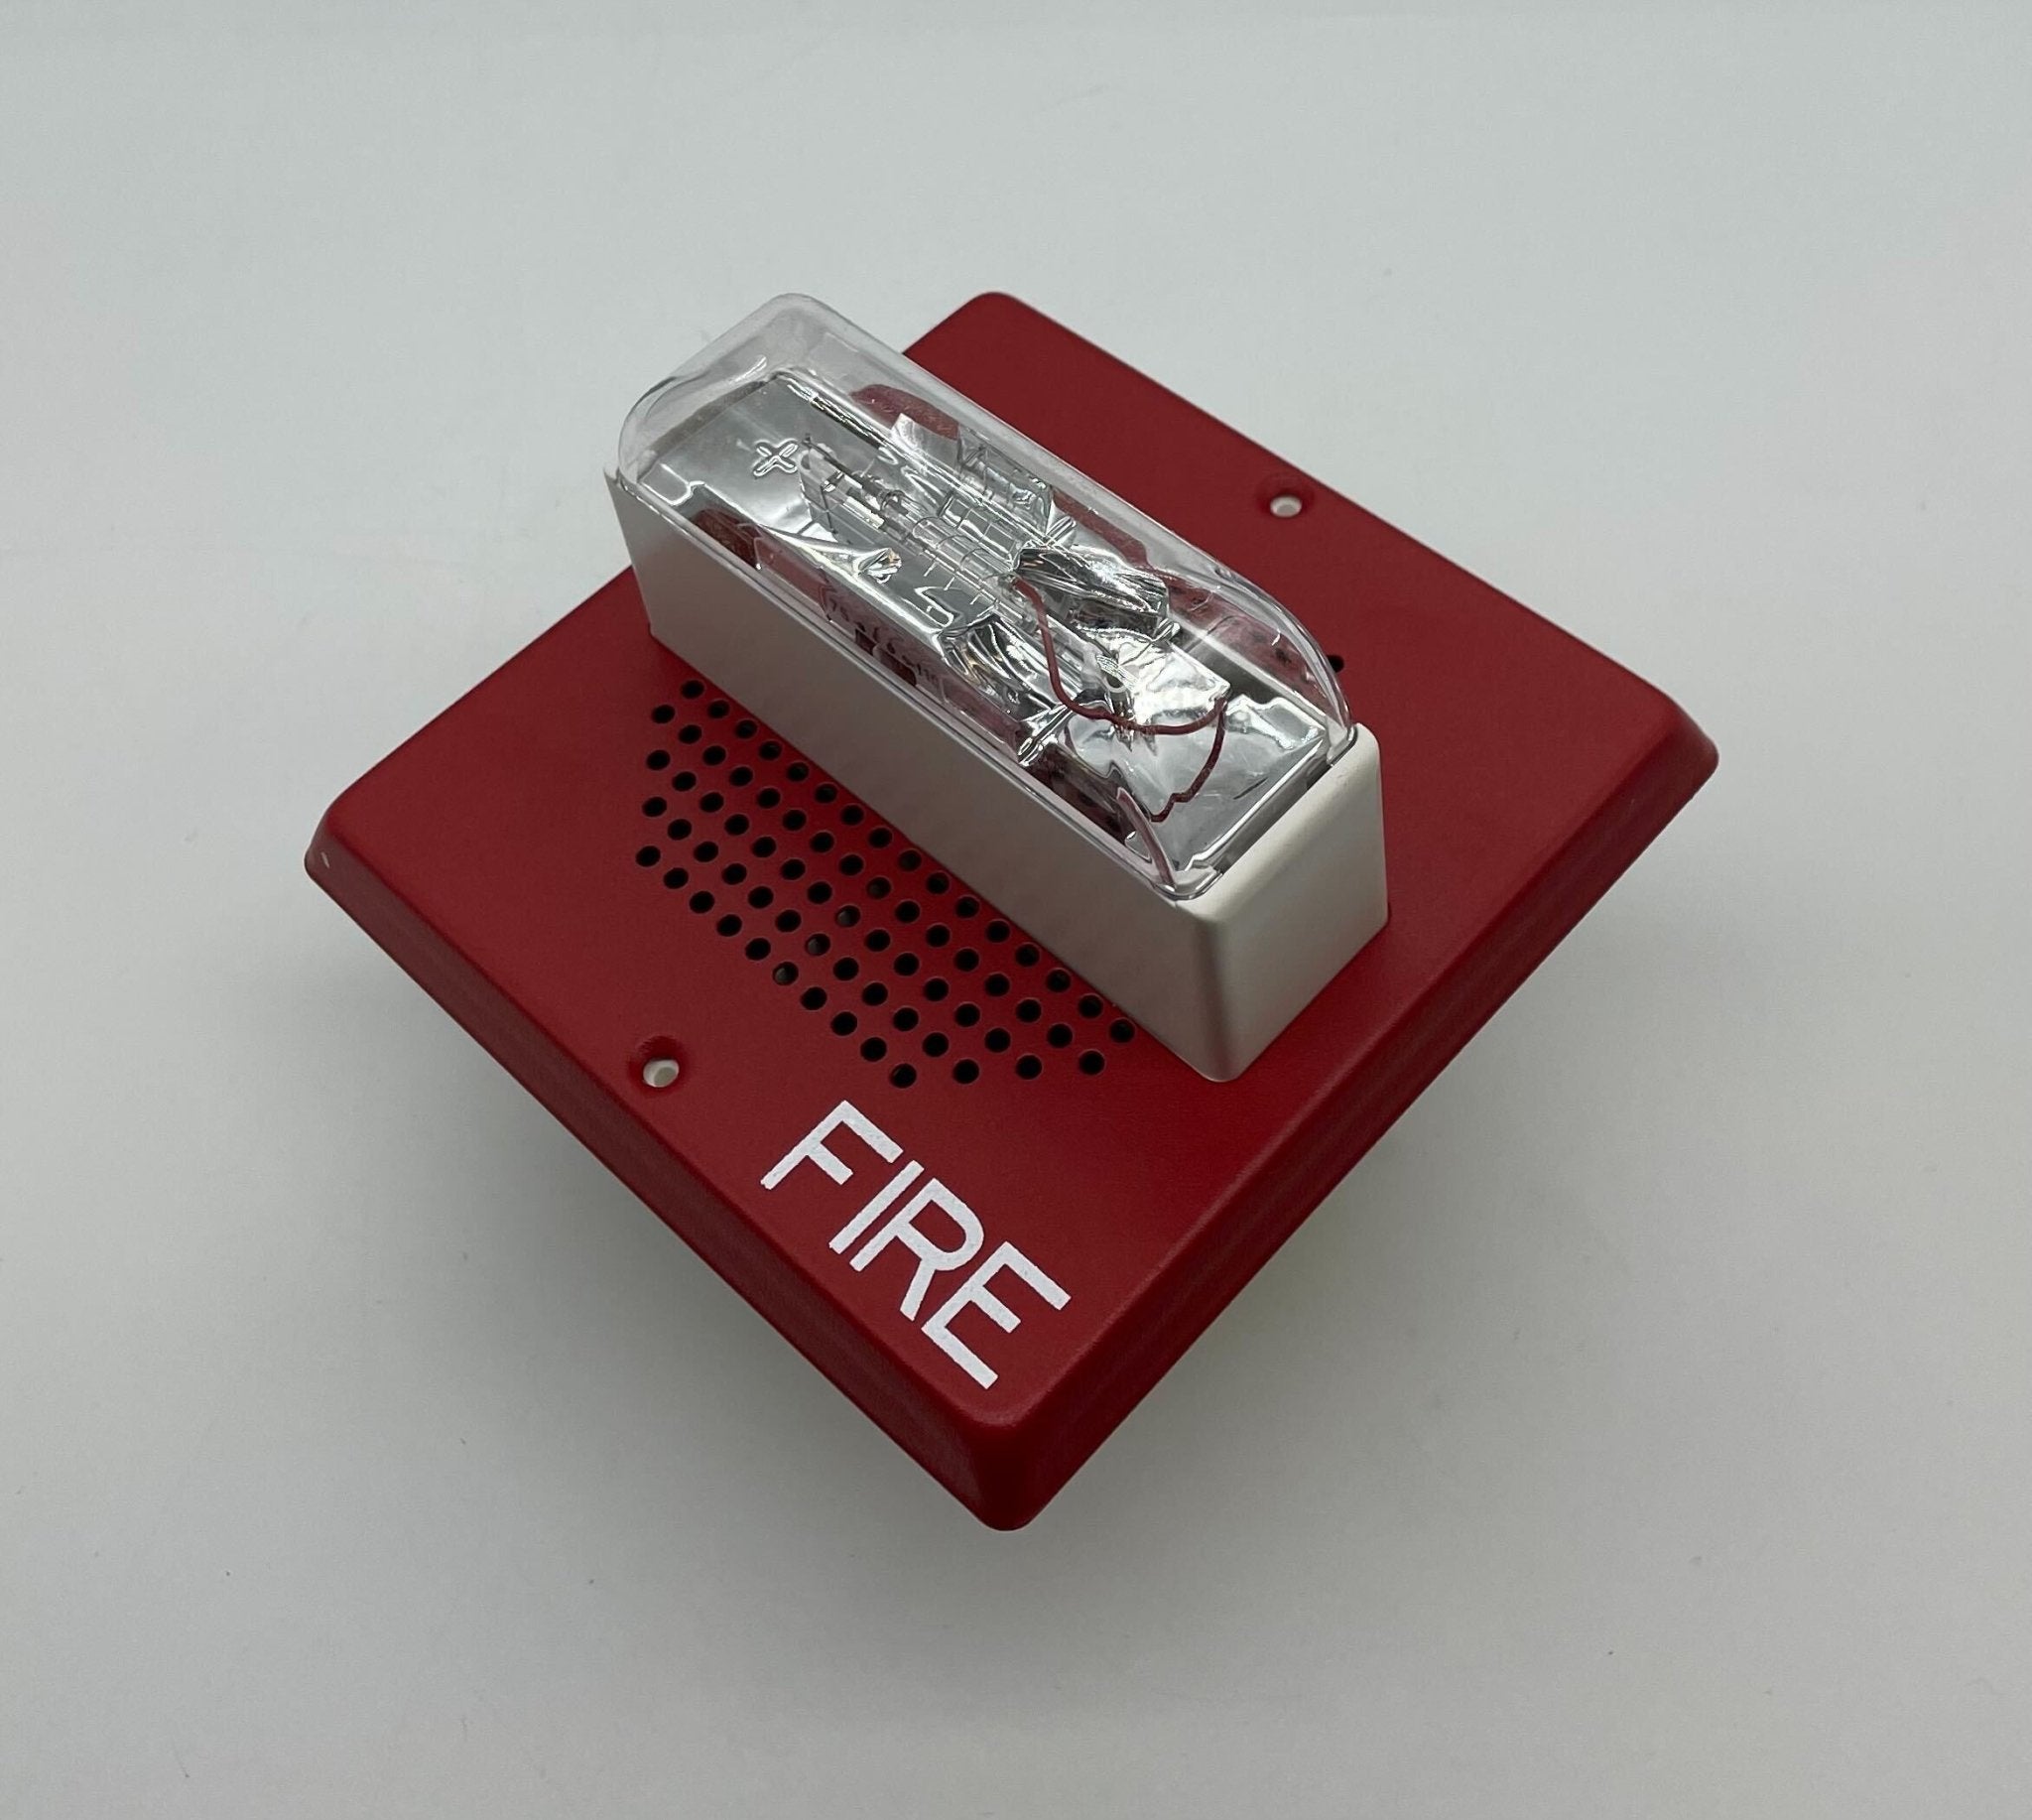 Wheelock E70H-24MCW-FR - The Fire Alarm Supplier